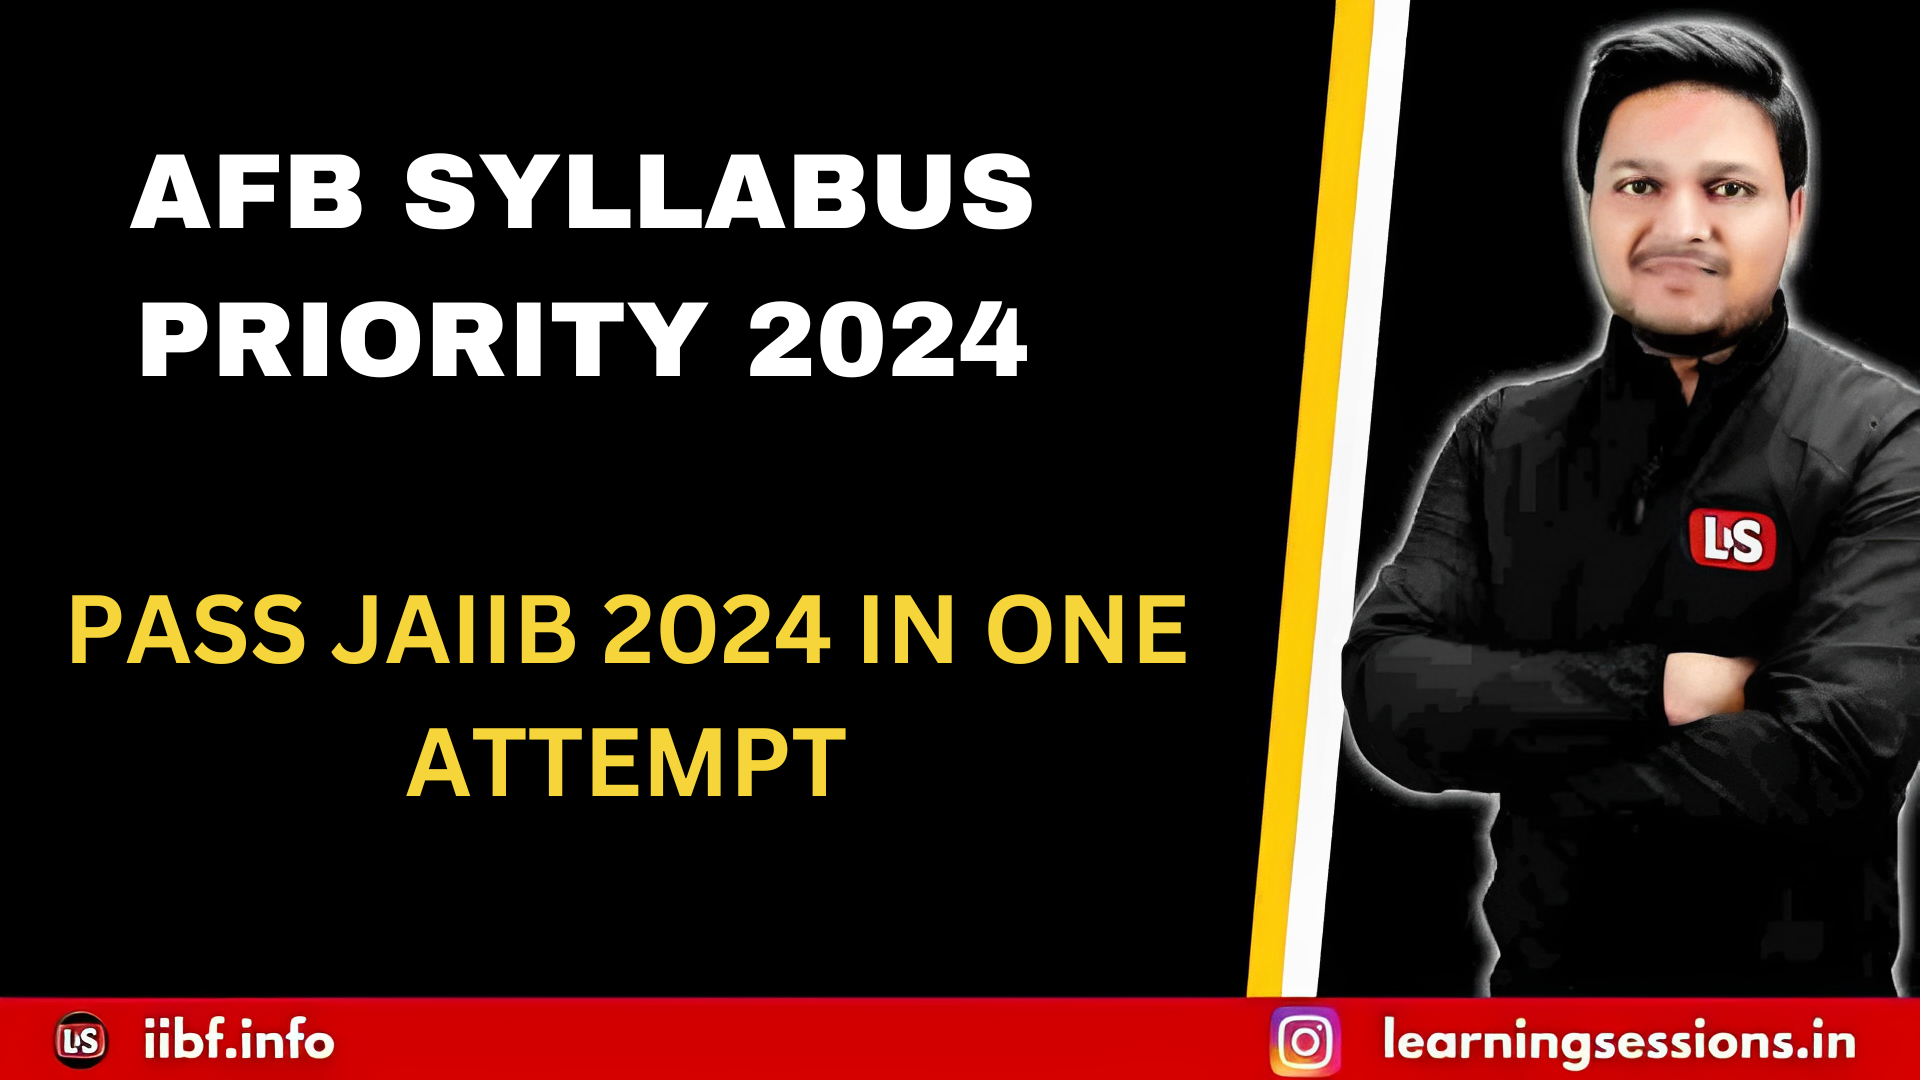 JAIIB AFB SYLLABUS PRIORITY 2024